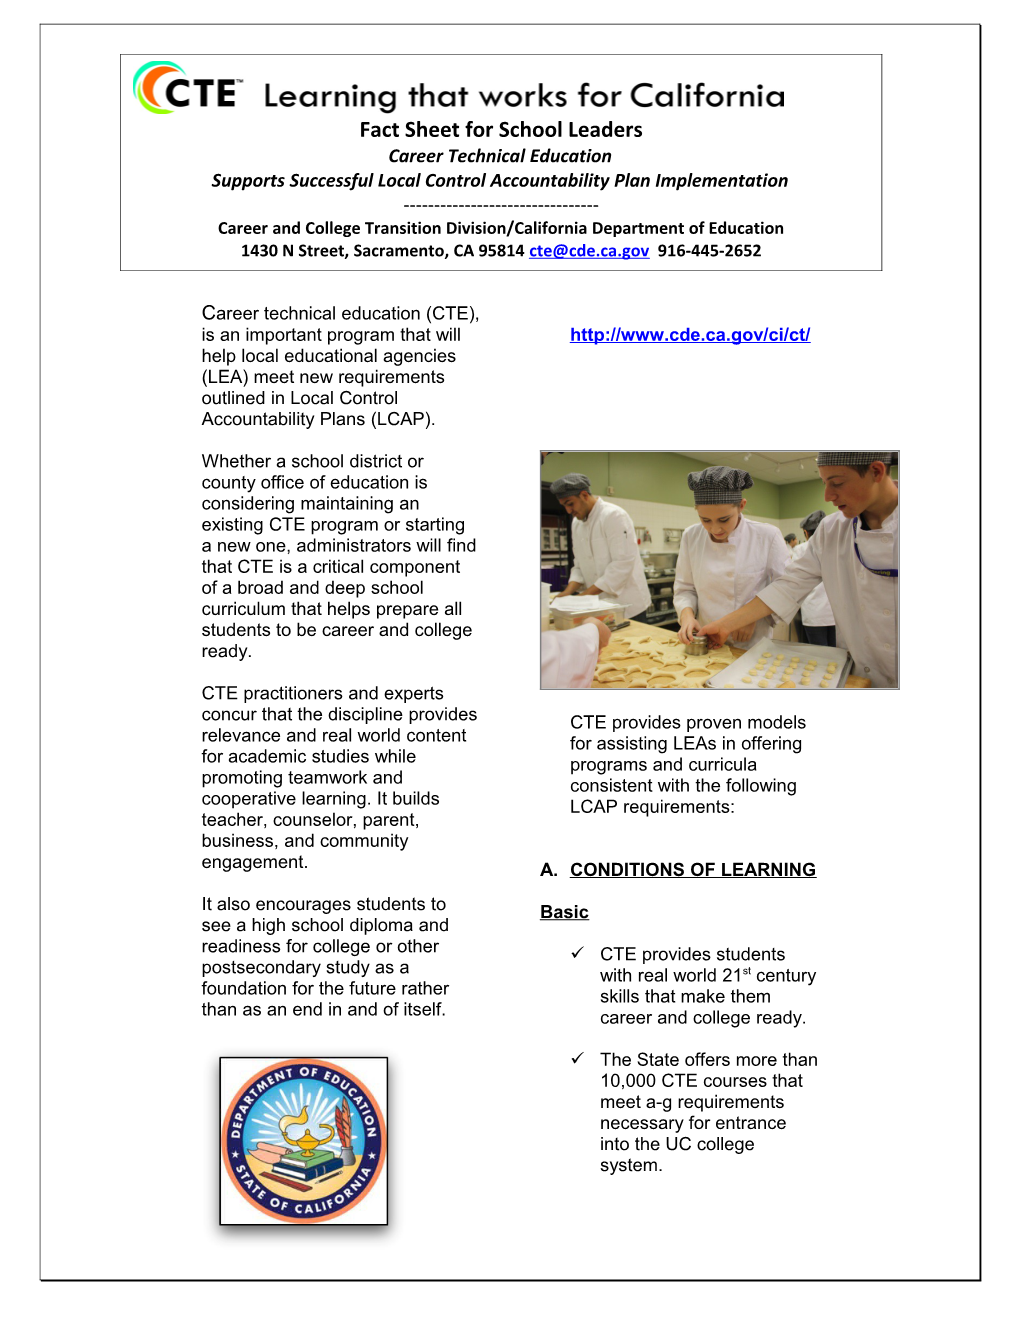 CTE Fact Sheet for School Leaders - Perkins (CA Dept of Education)